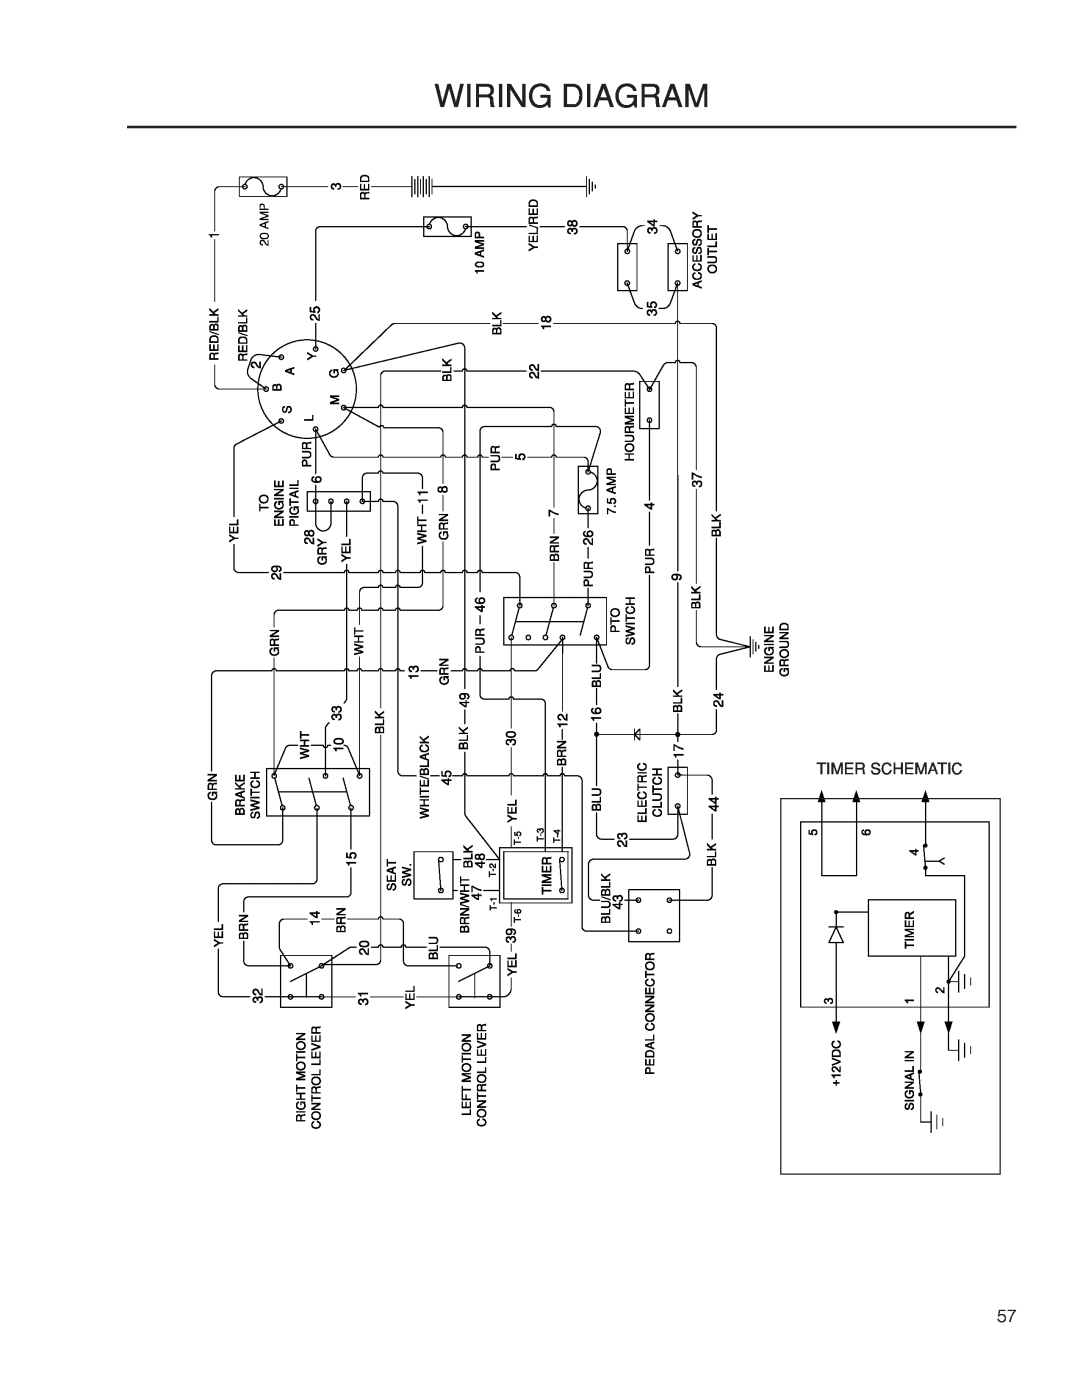 Yazoo/Kees ZPKW5426 manual Wiring Diagram, Timer Schematic 